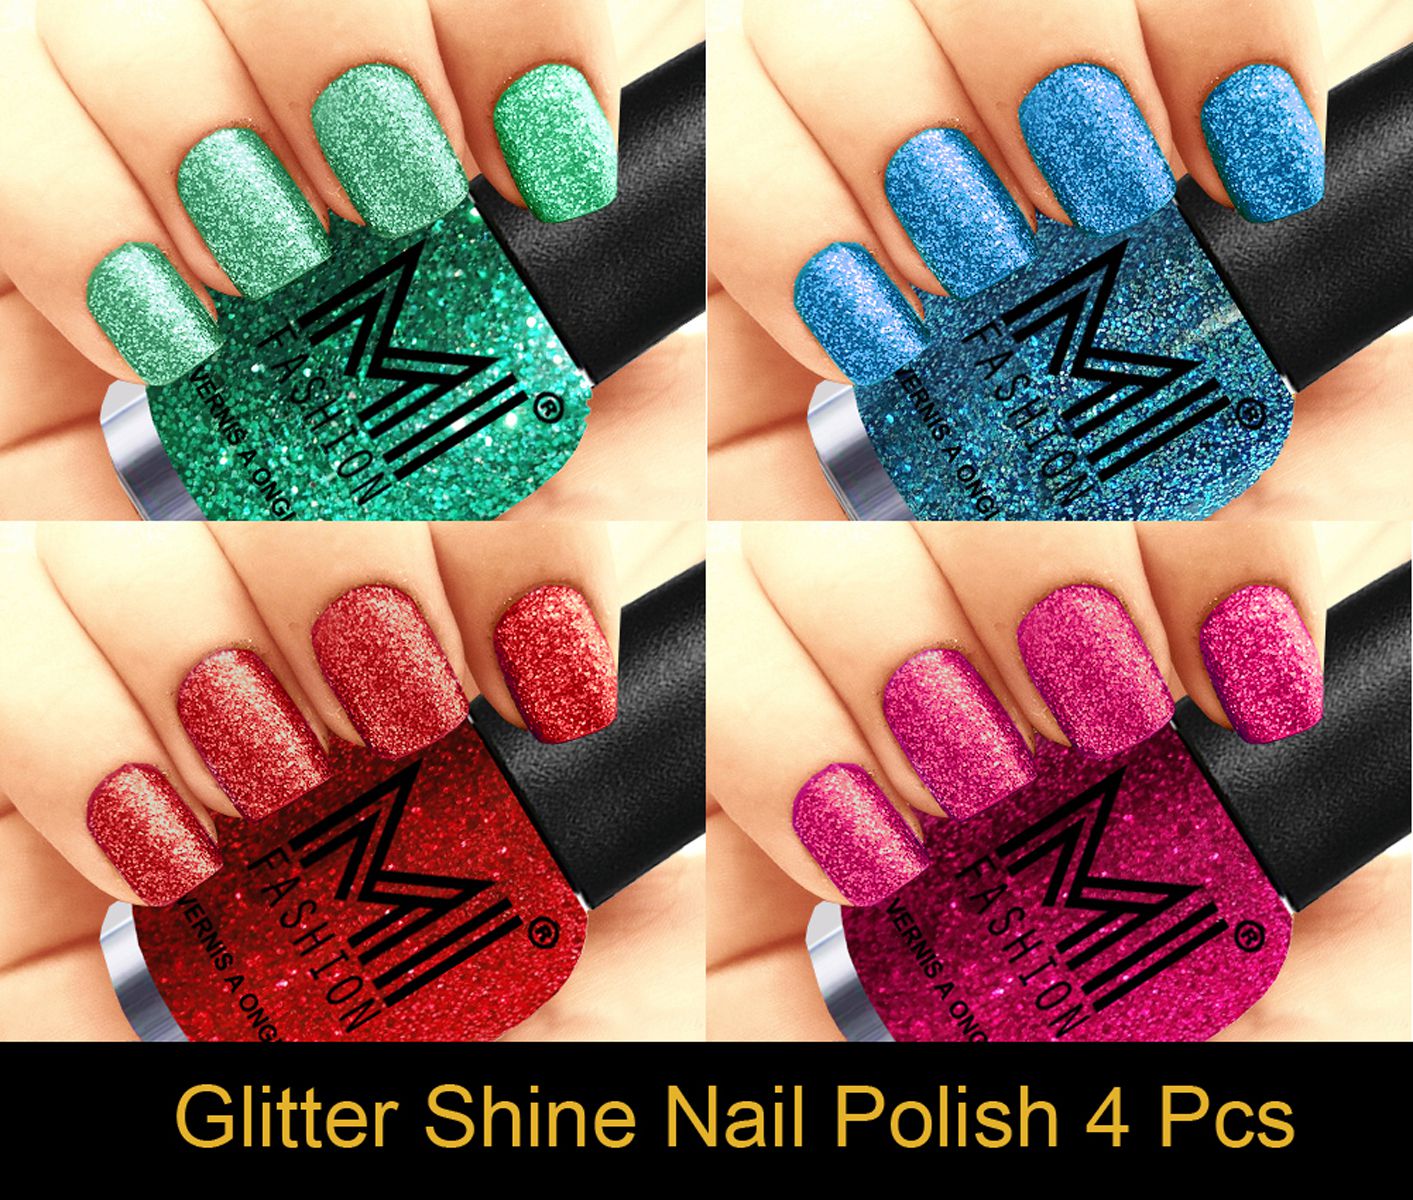 MI FASHION Long Lasting Professional Glitter Nail Polish Radium,Sky Blue,Red,Magenta Glitter Pack of 4 mL